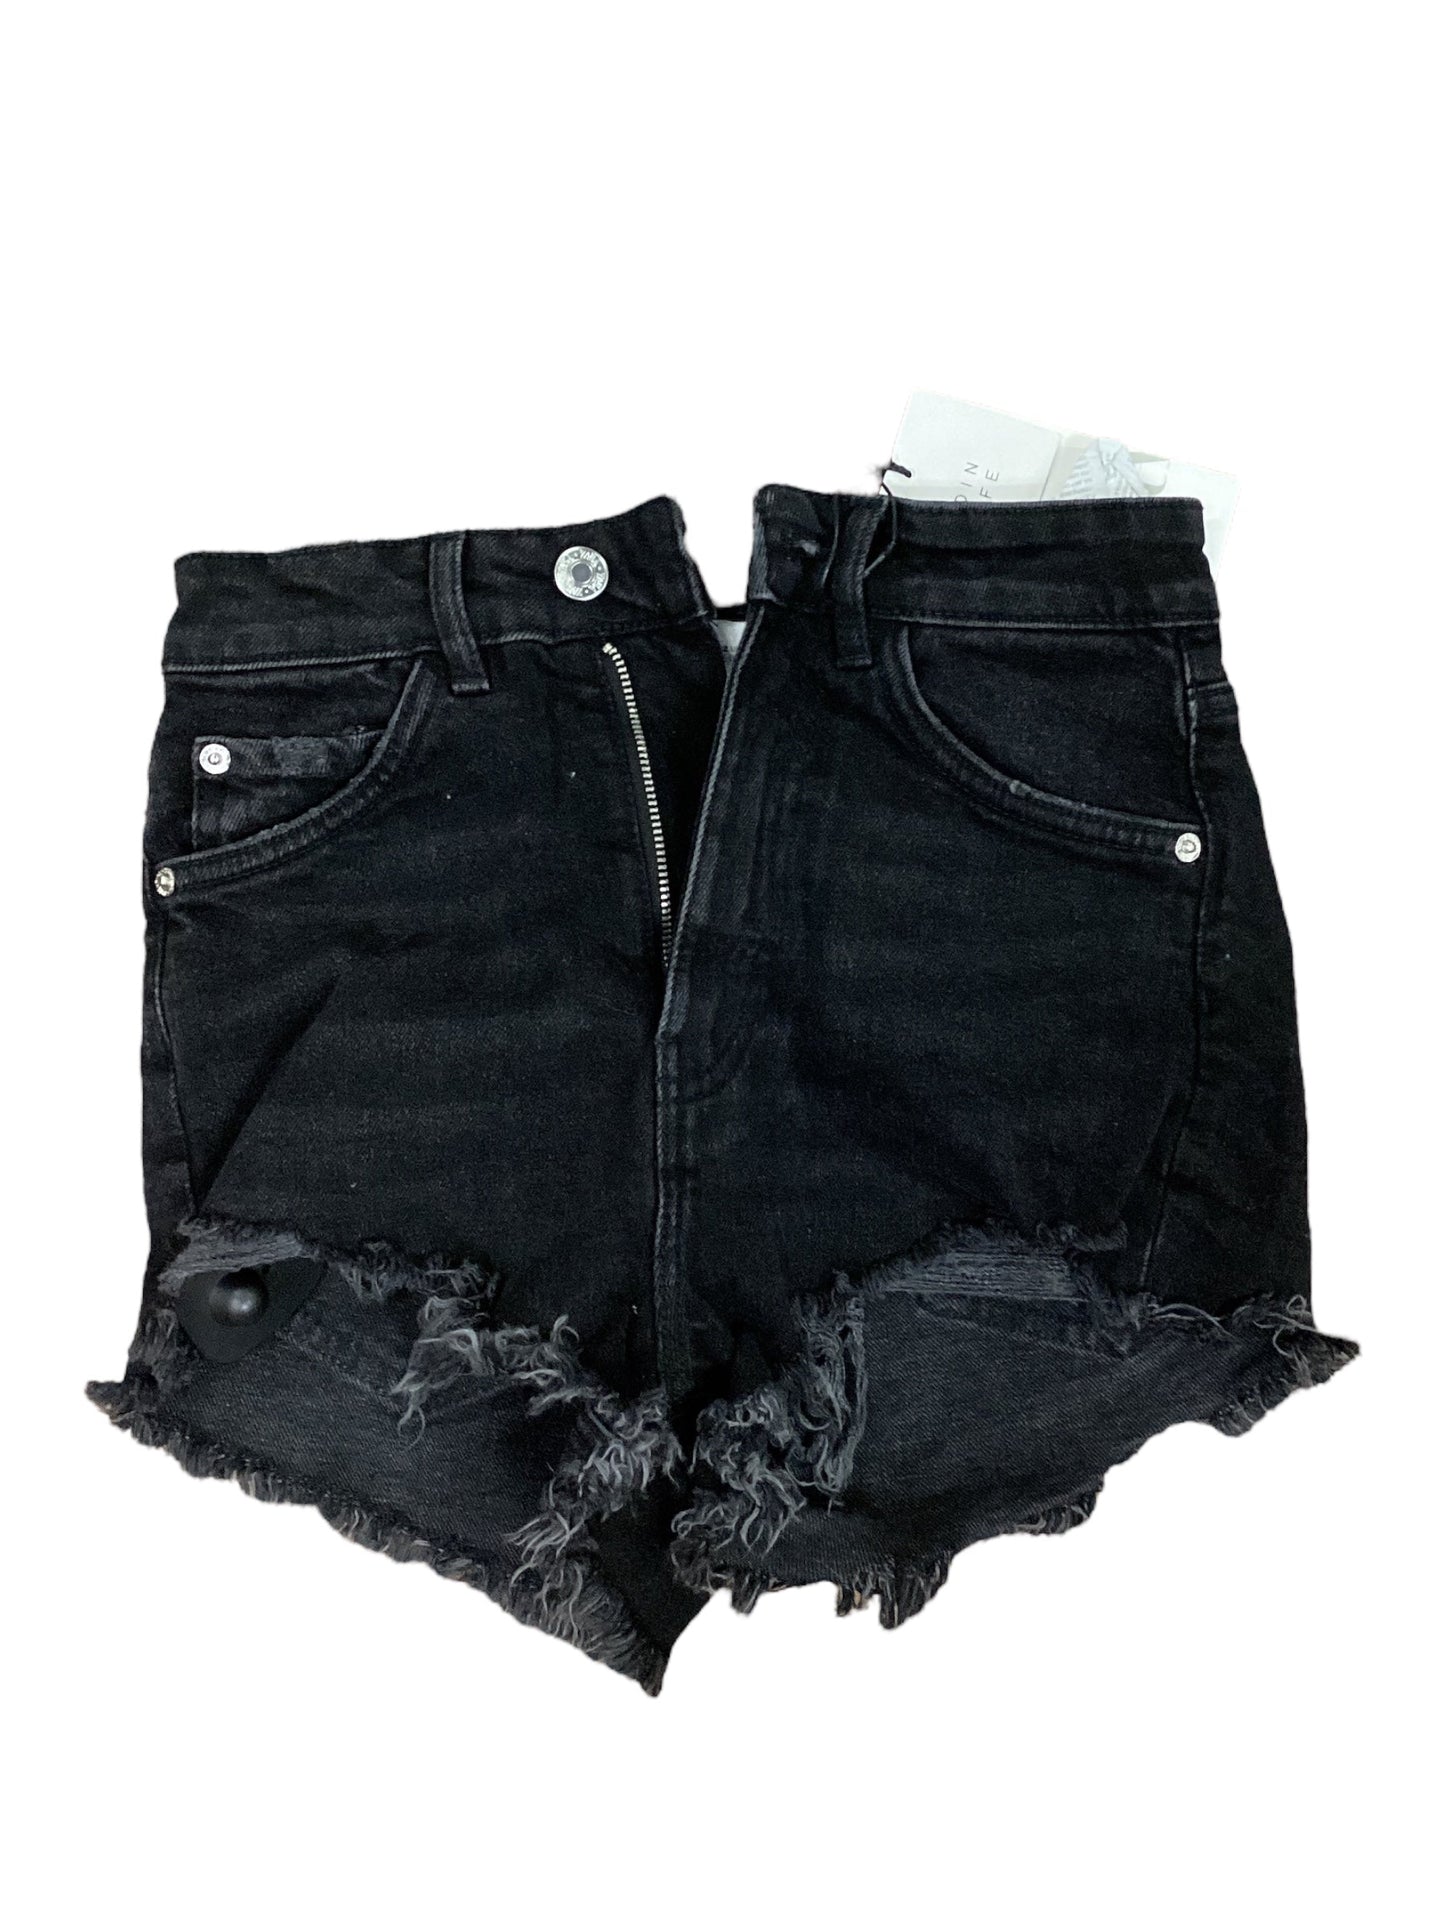 Shorts By Zara  Size: Xs